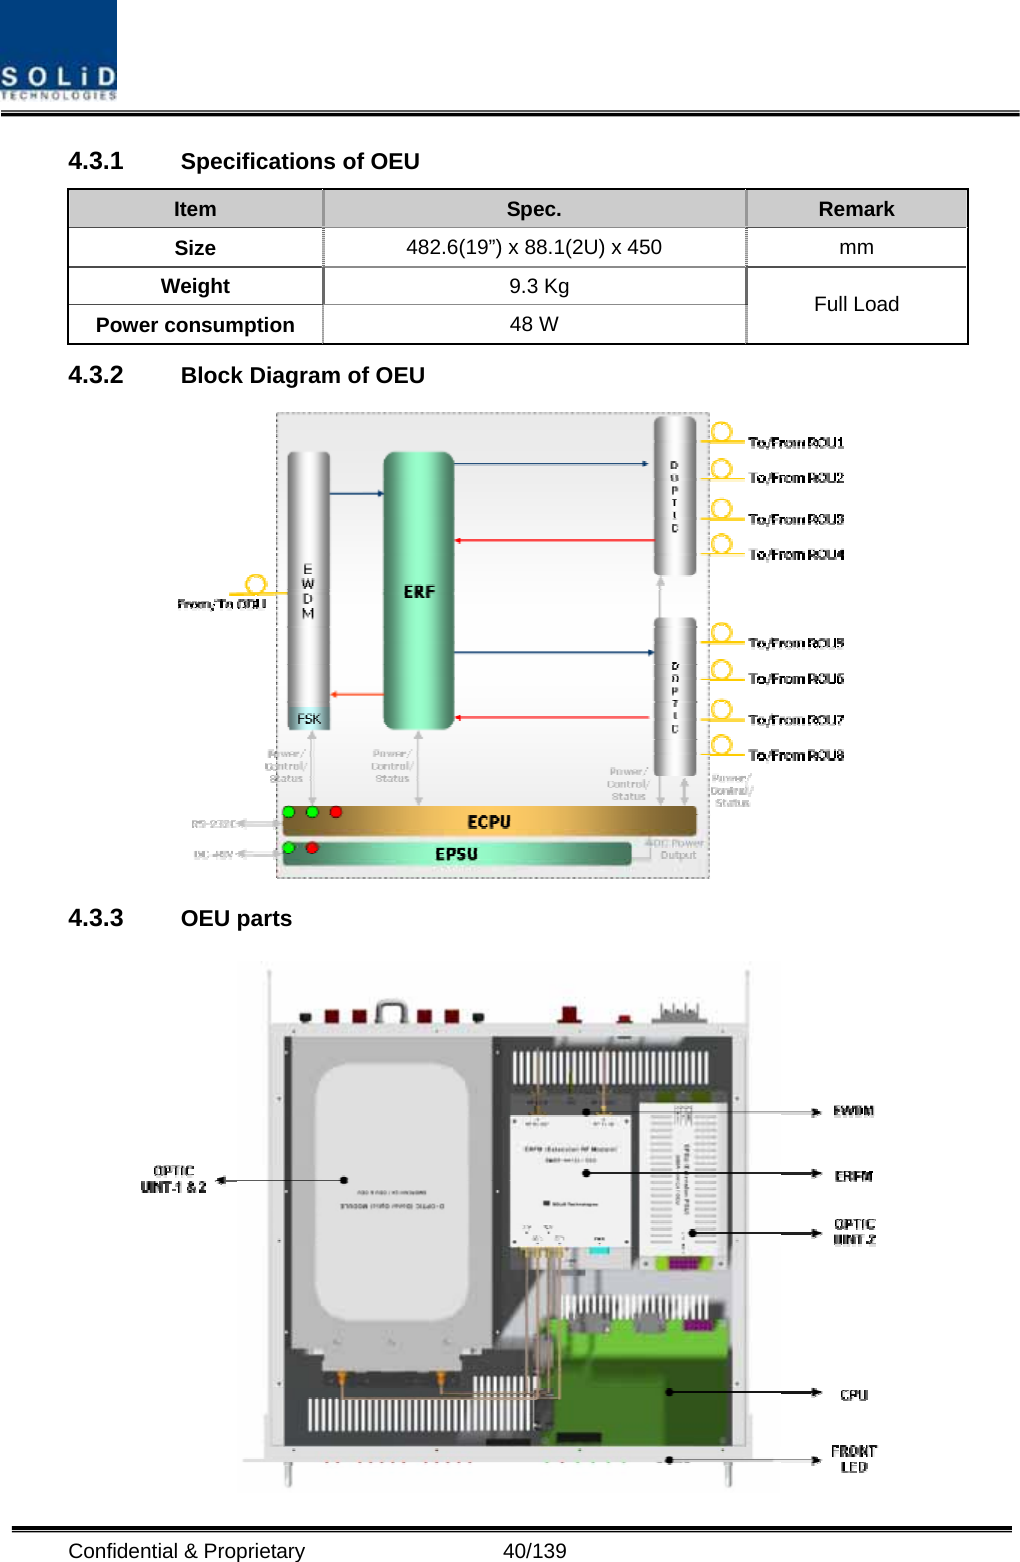  Confidential &amp; Proprietary                   40/139 4.3.1  Specifications of OEU Item  Spec.  Remark Size  482.6(19”) x 88.1(2U) x 450  mm Weight   9.3 Kg Power consumption  48 W  Full Load 4.3.2  Block Diagram of OEU  4.3.3  OEU parts  